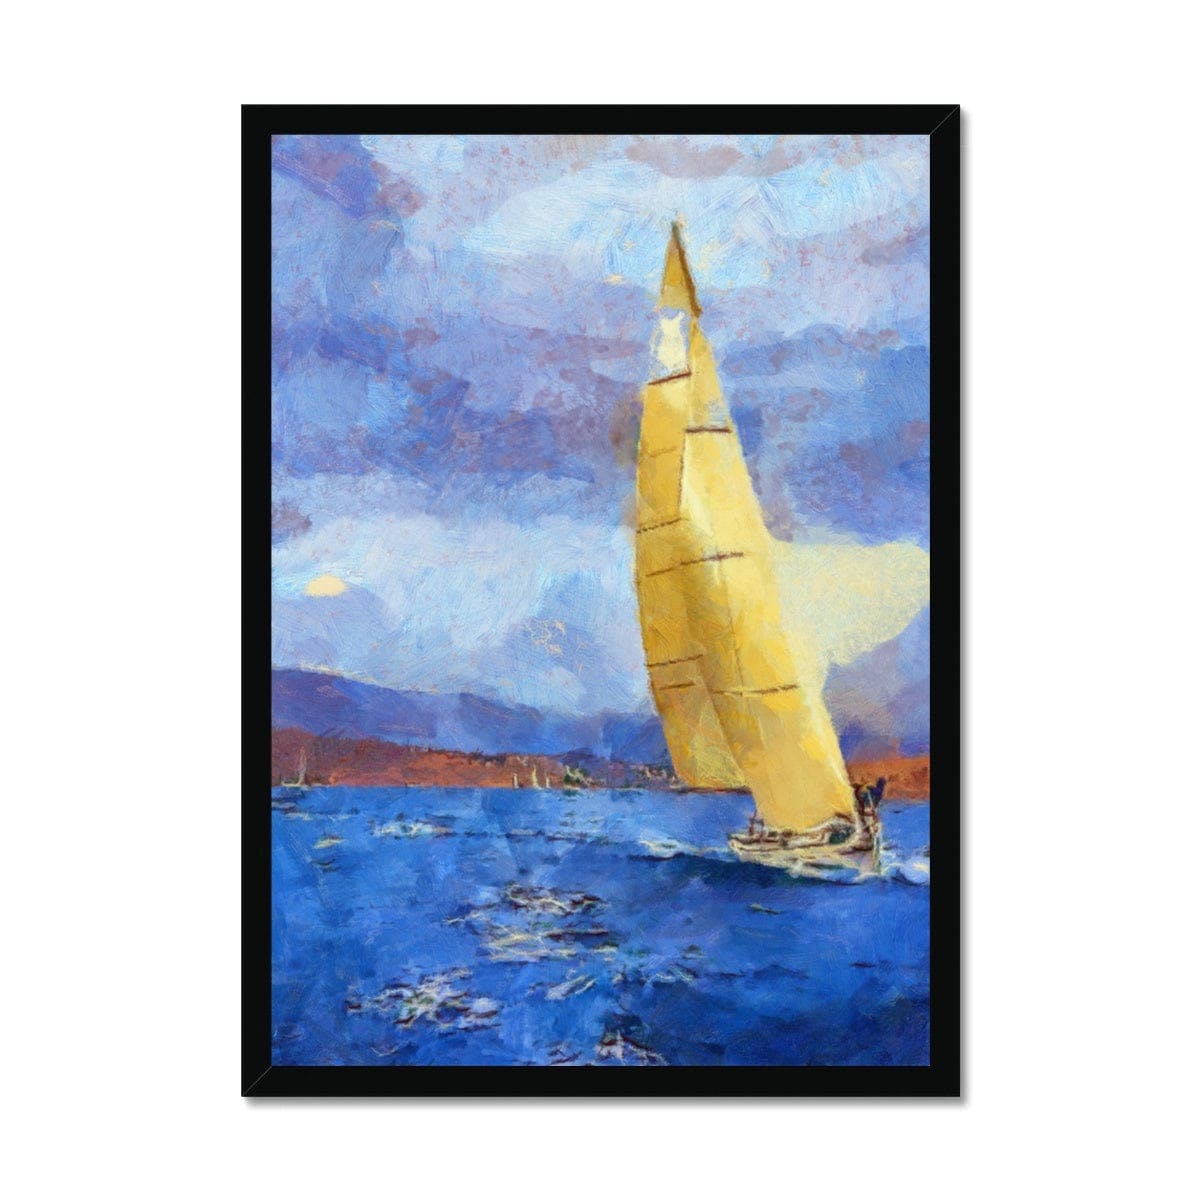 Sailing Framed Print